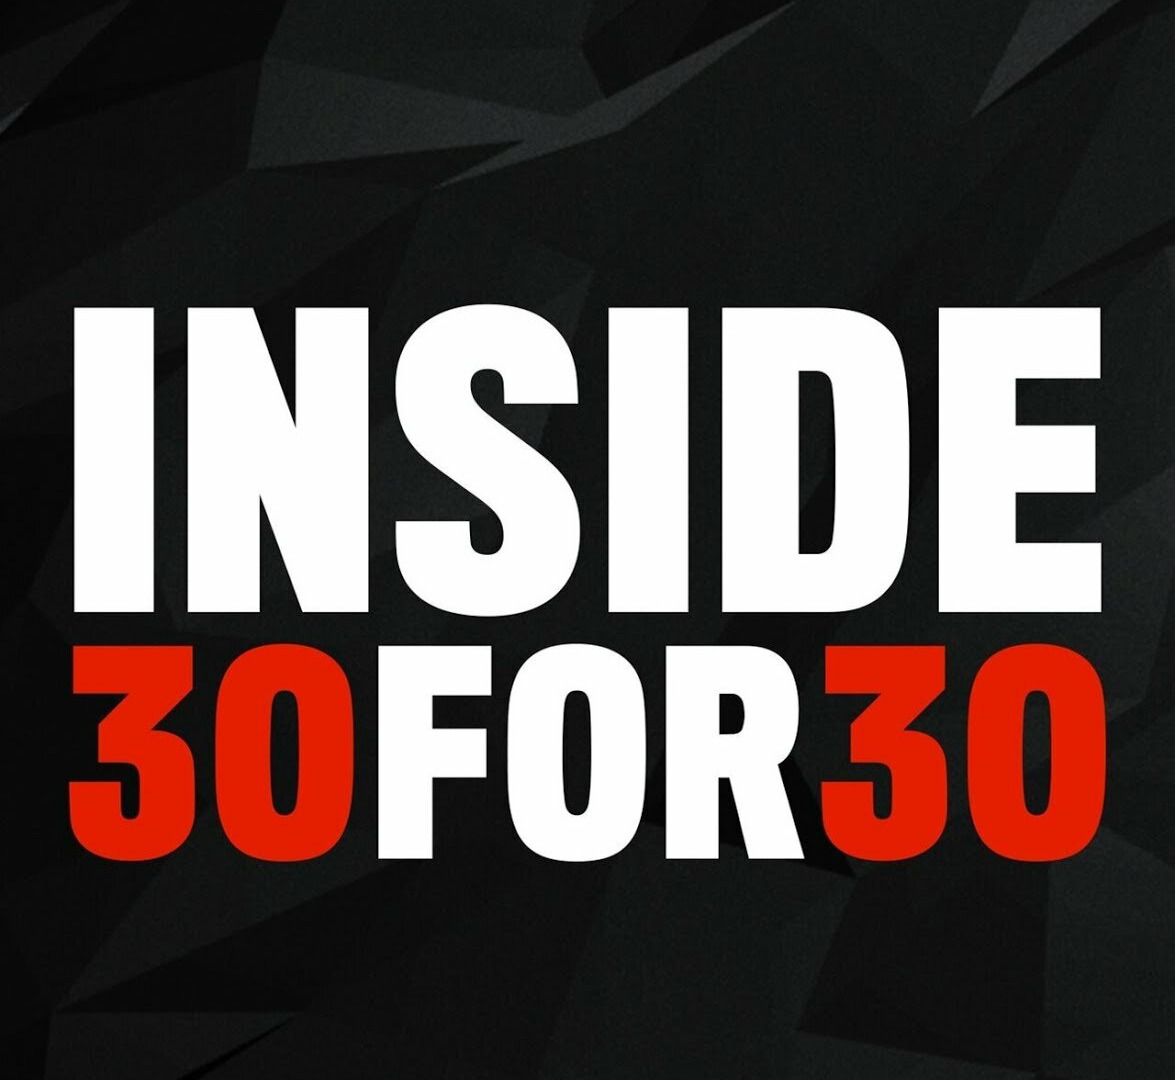 Show Inside 30 for 30